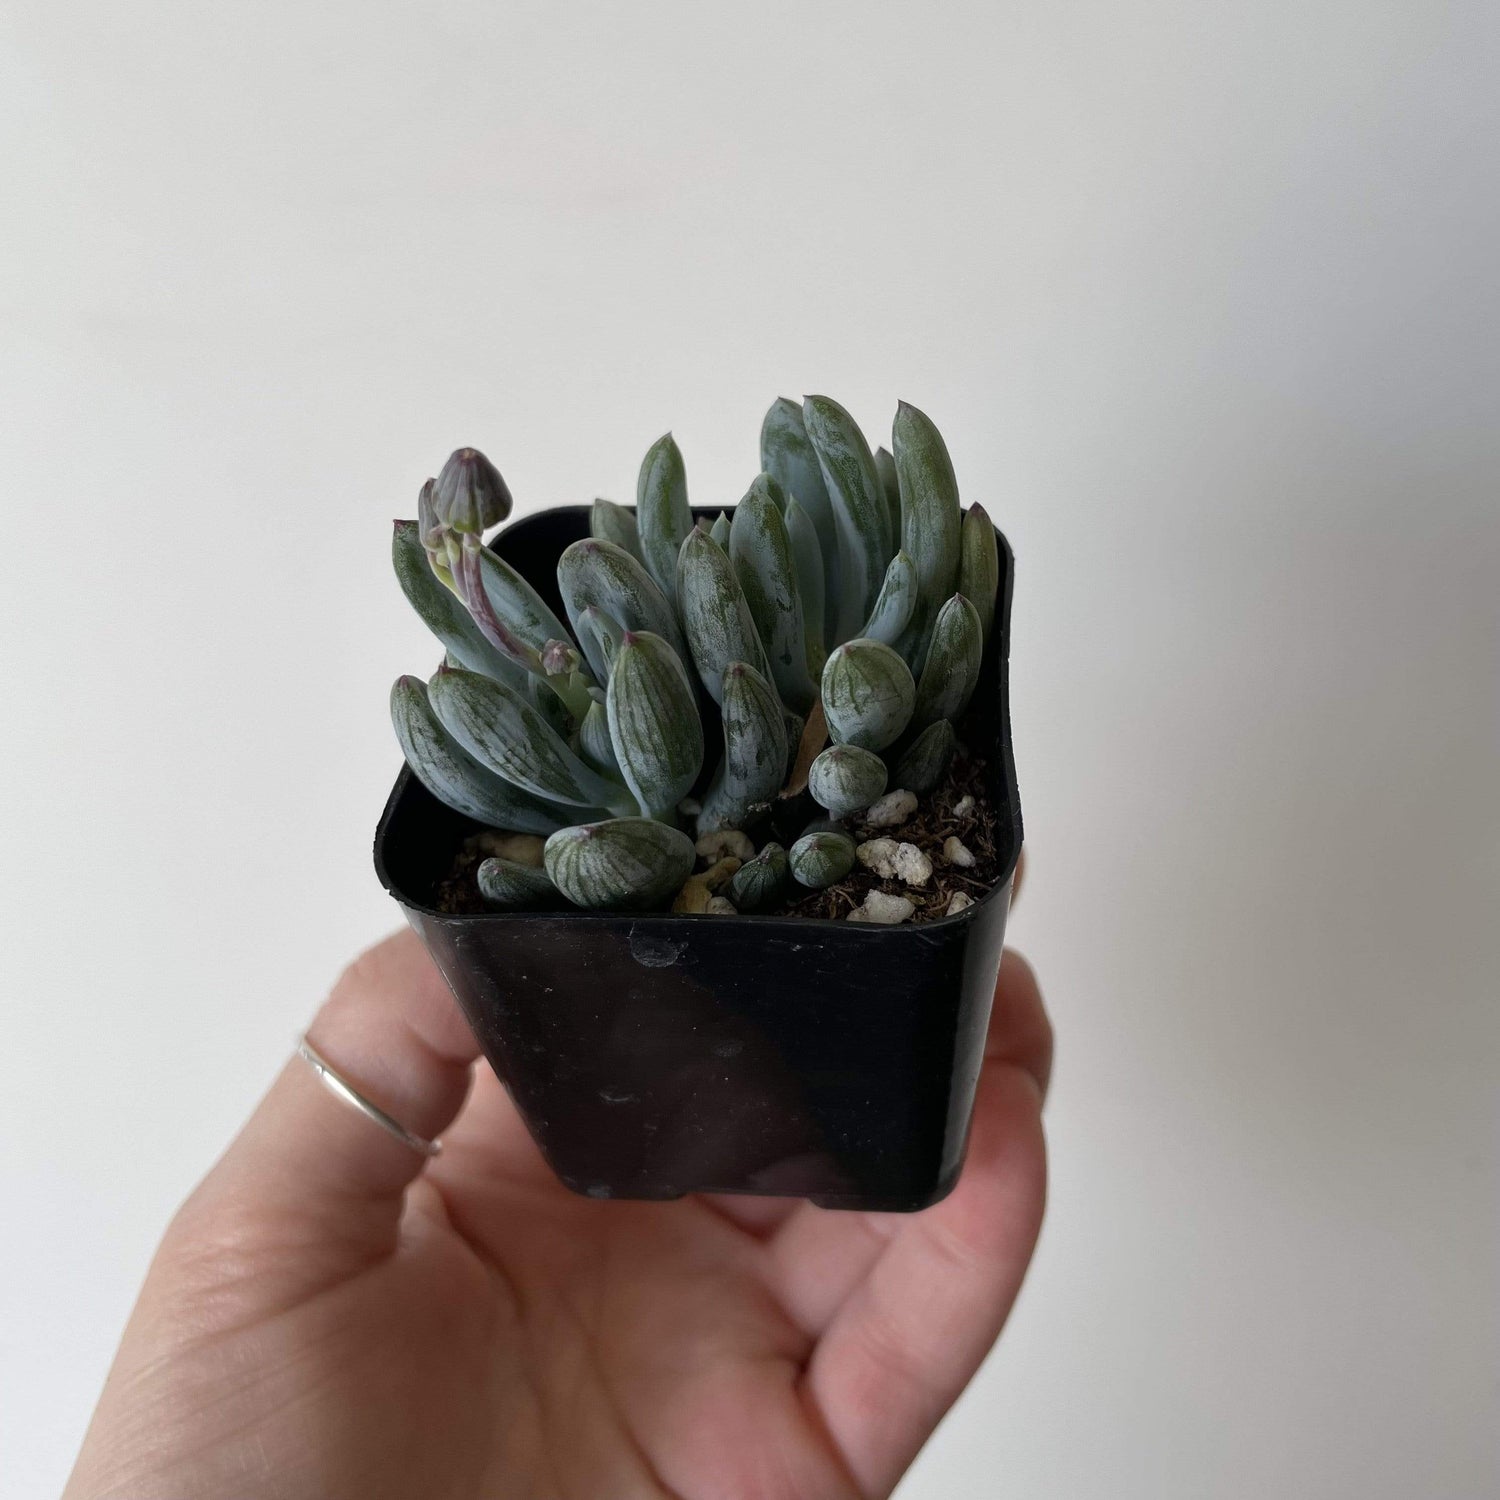 Urban Sprouts Plant 2" in nursery pot Succulent 'Dwarf Blue Chalksticks'